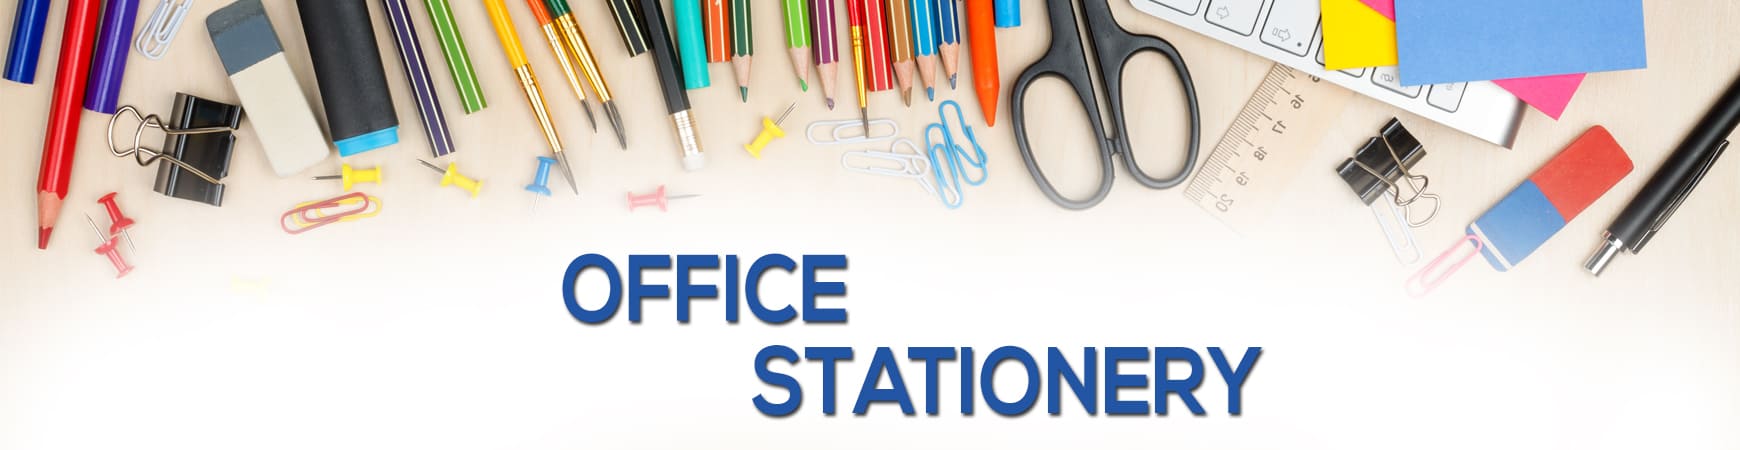 office-stationery